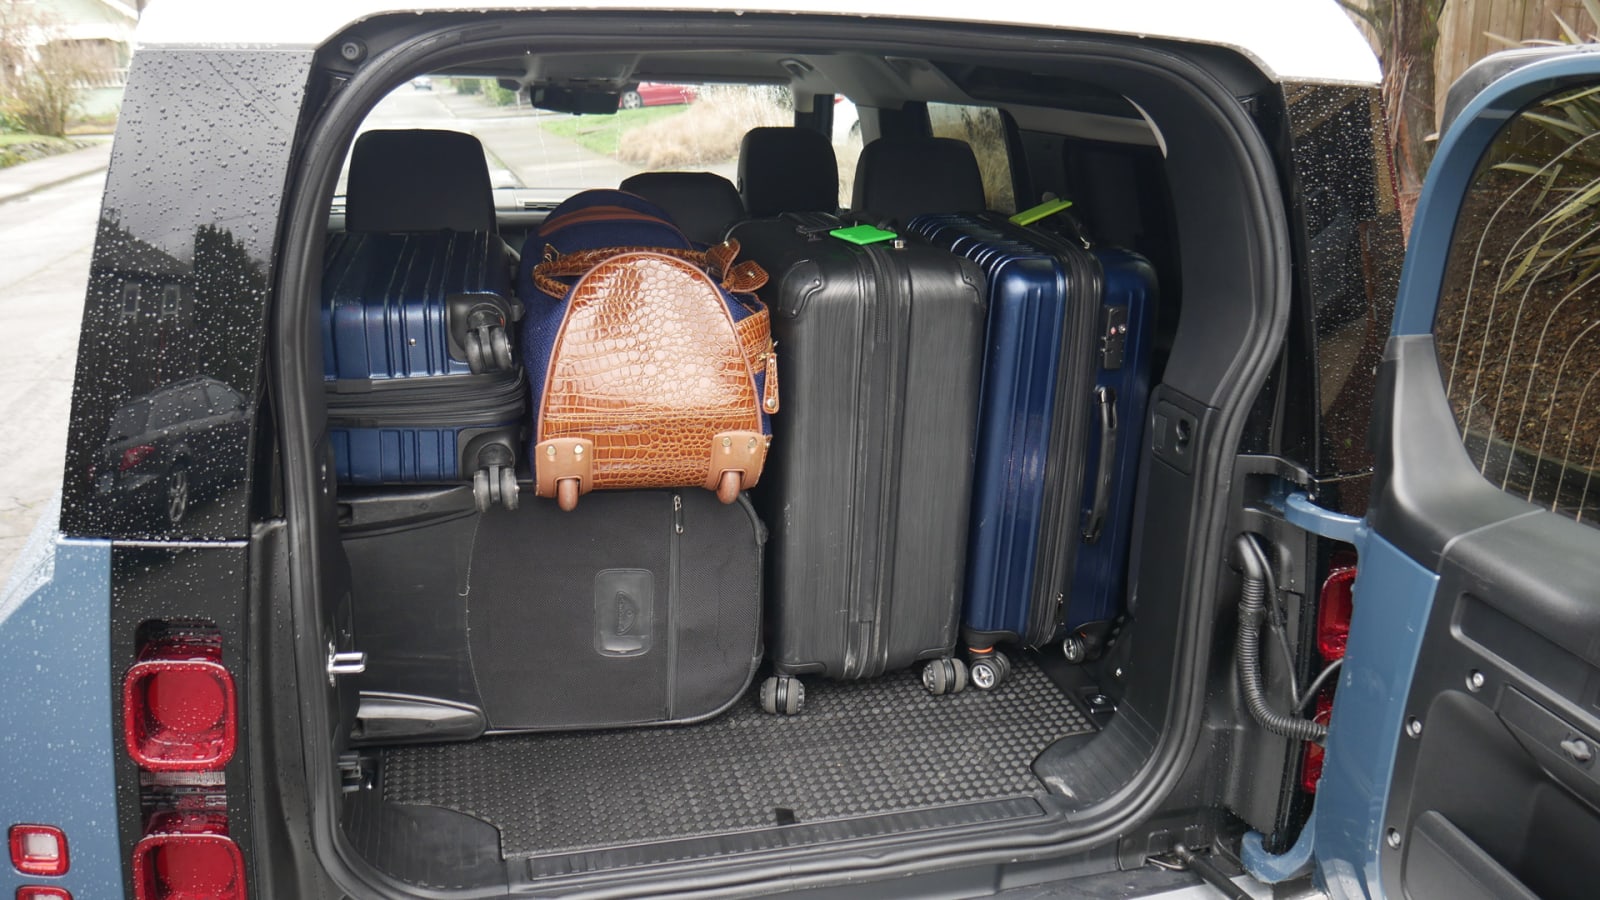 Land Rover Defender 110 Luggage Test Cargo Capacity Storage Trunk